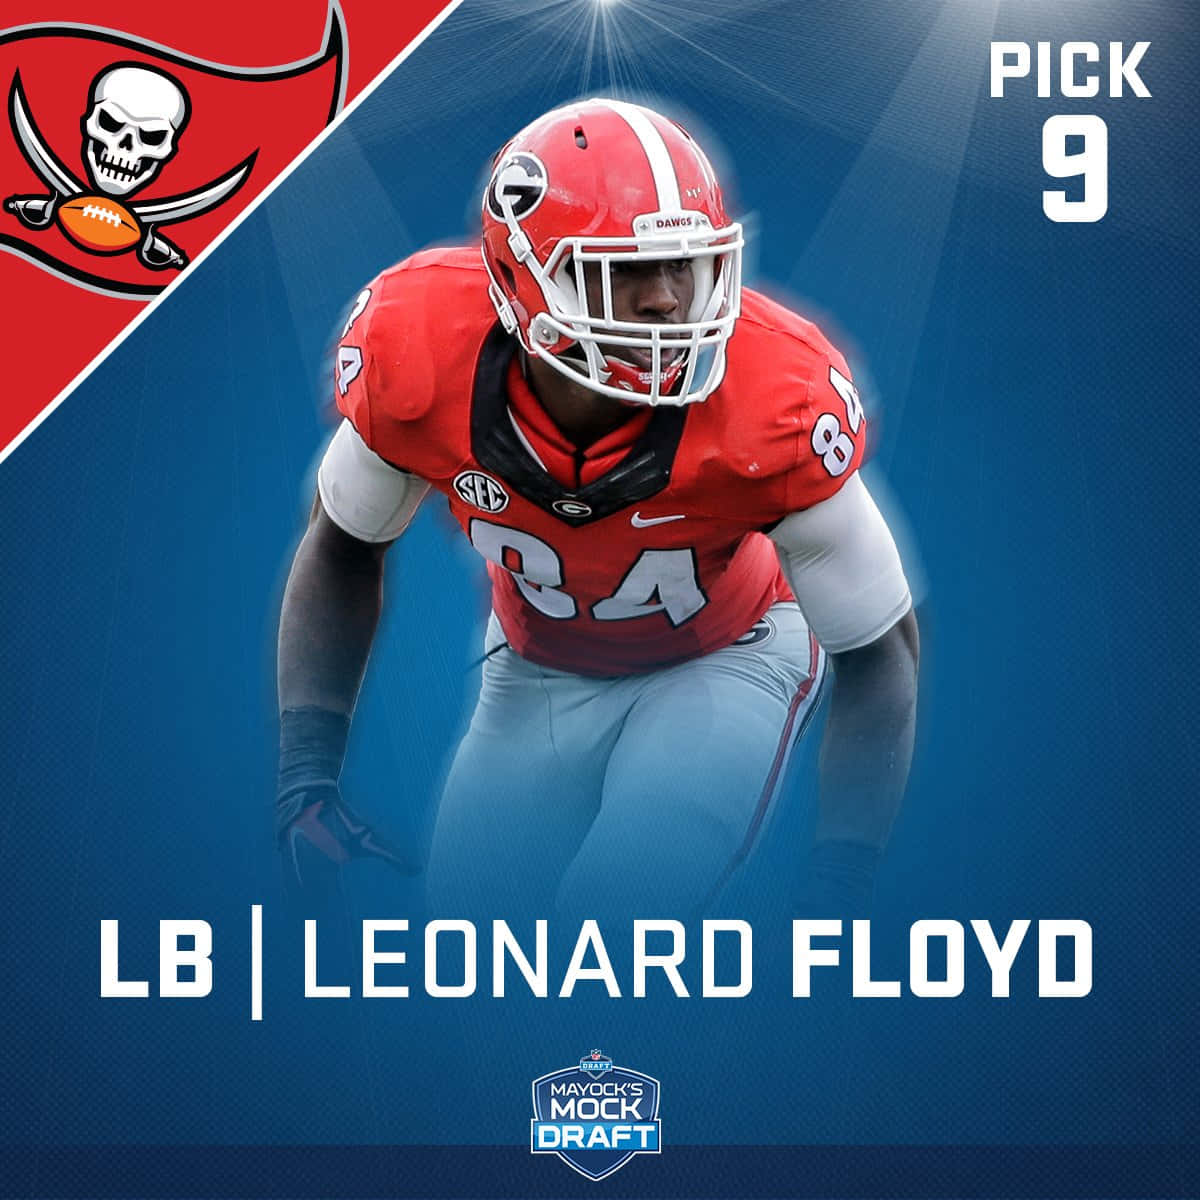 Leonard Floyd NFL Drafting Poster Wallpaper